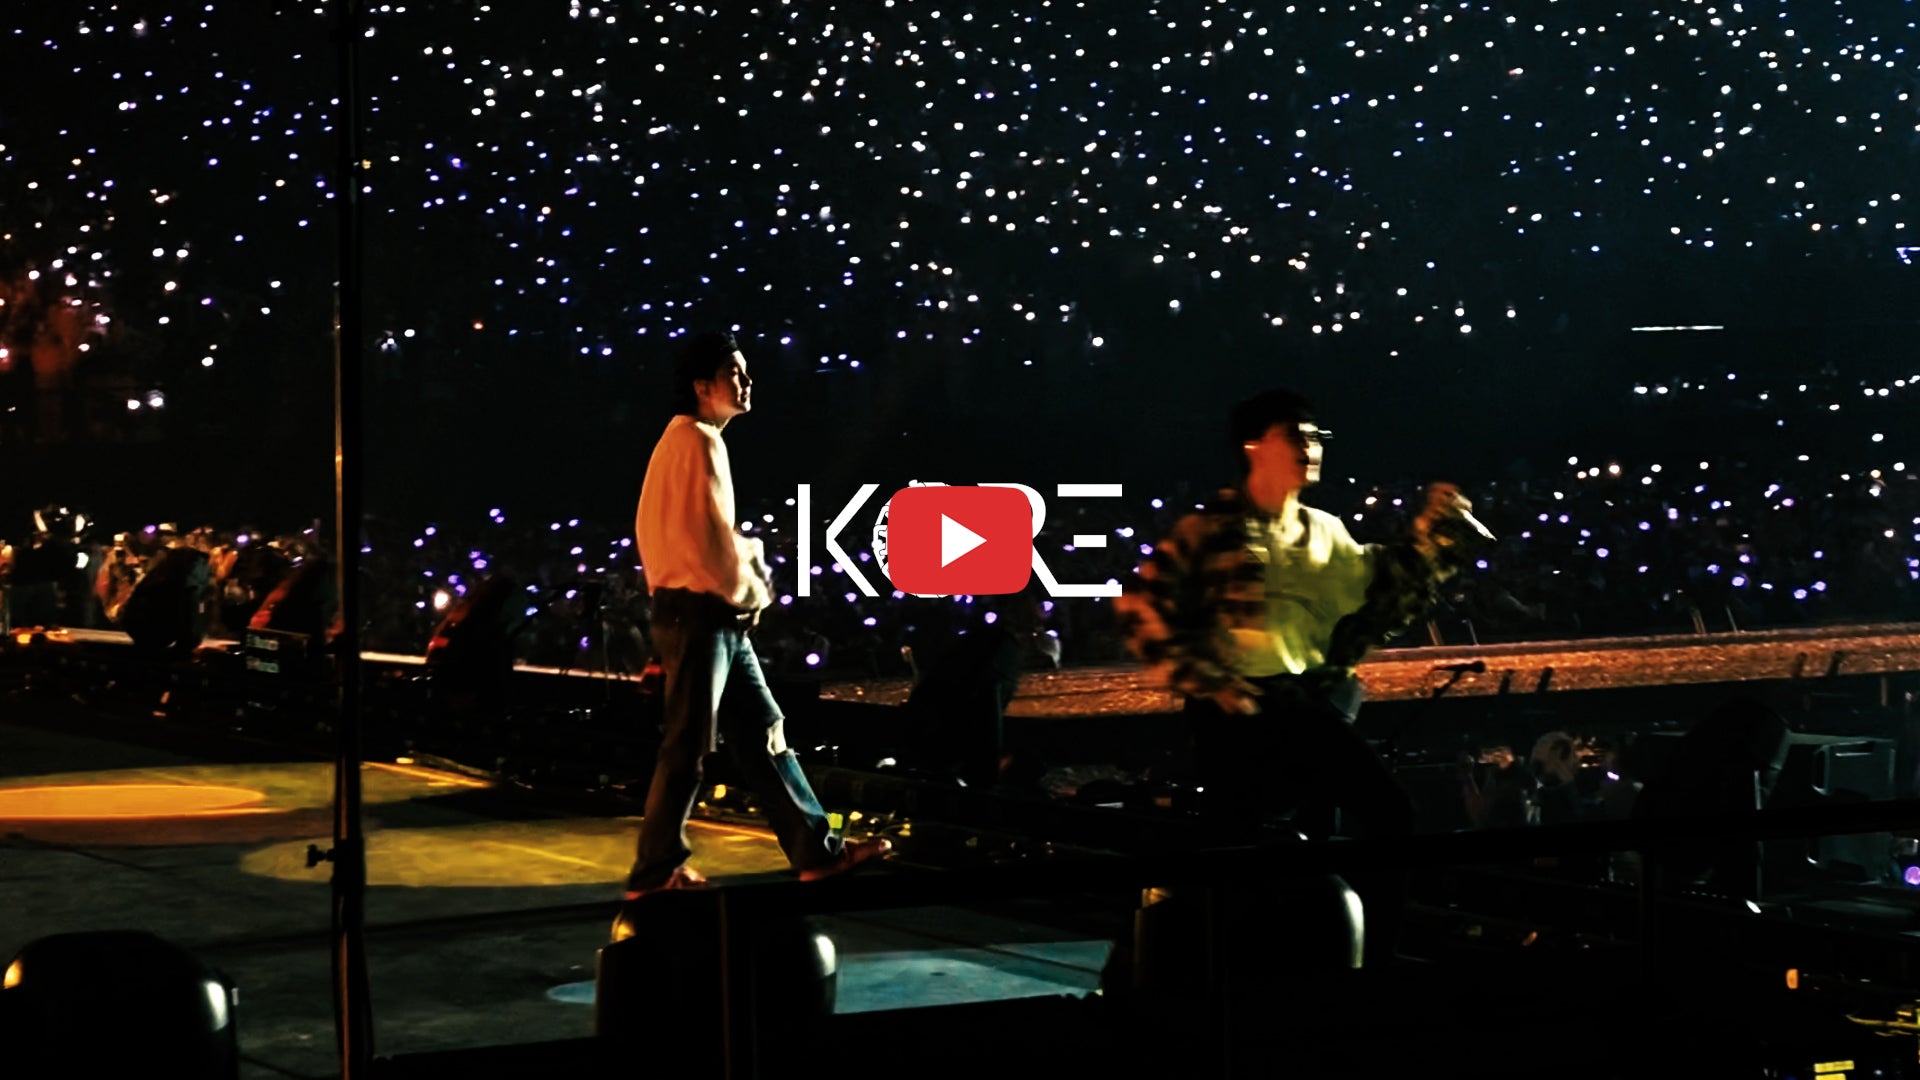 KORE Vegas Pop Up and BTS Concert recap video